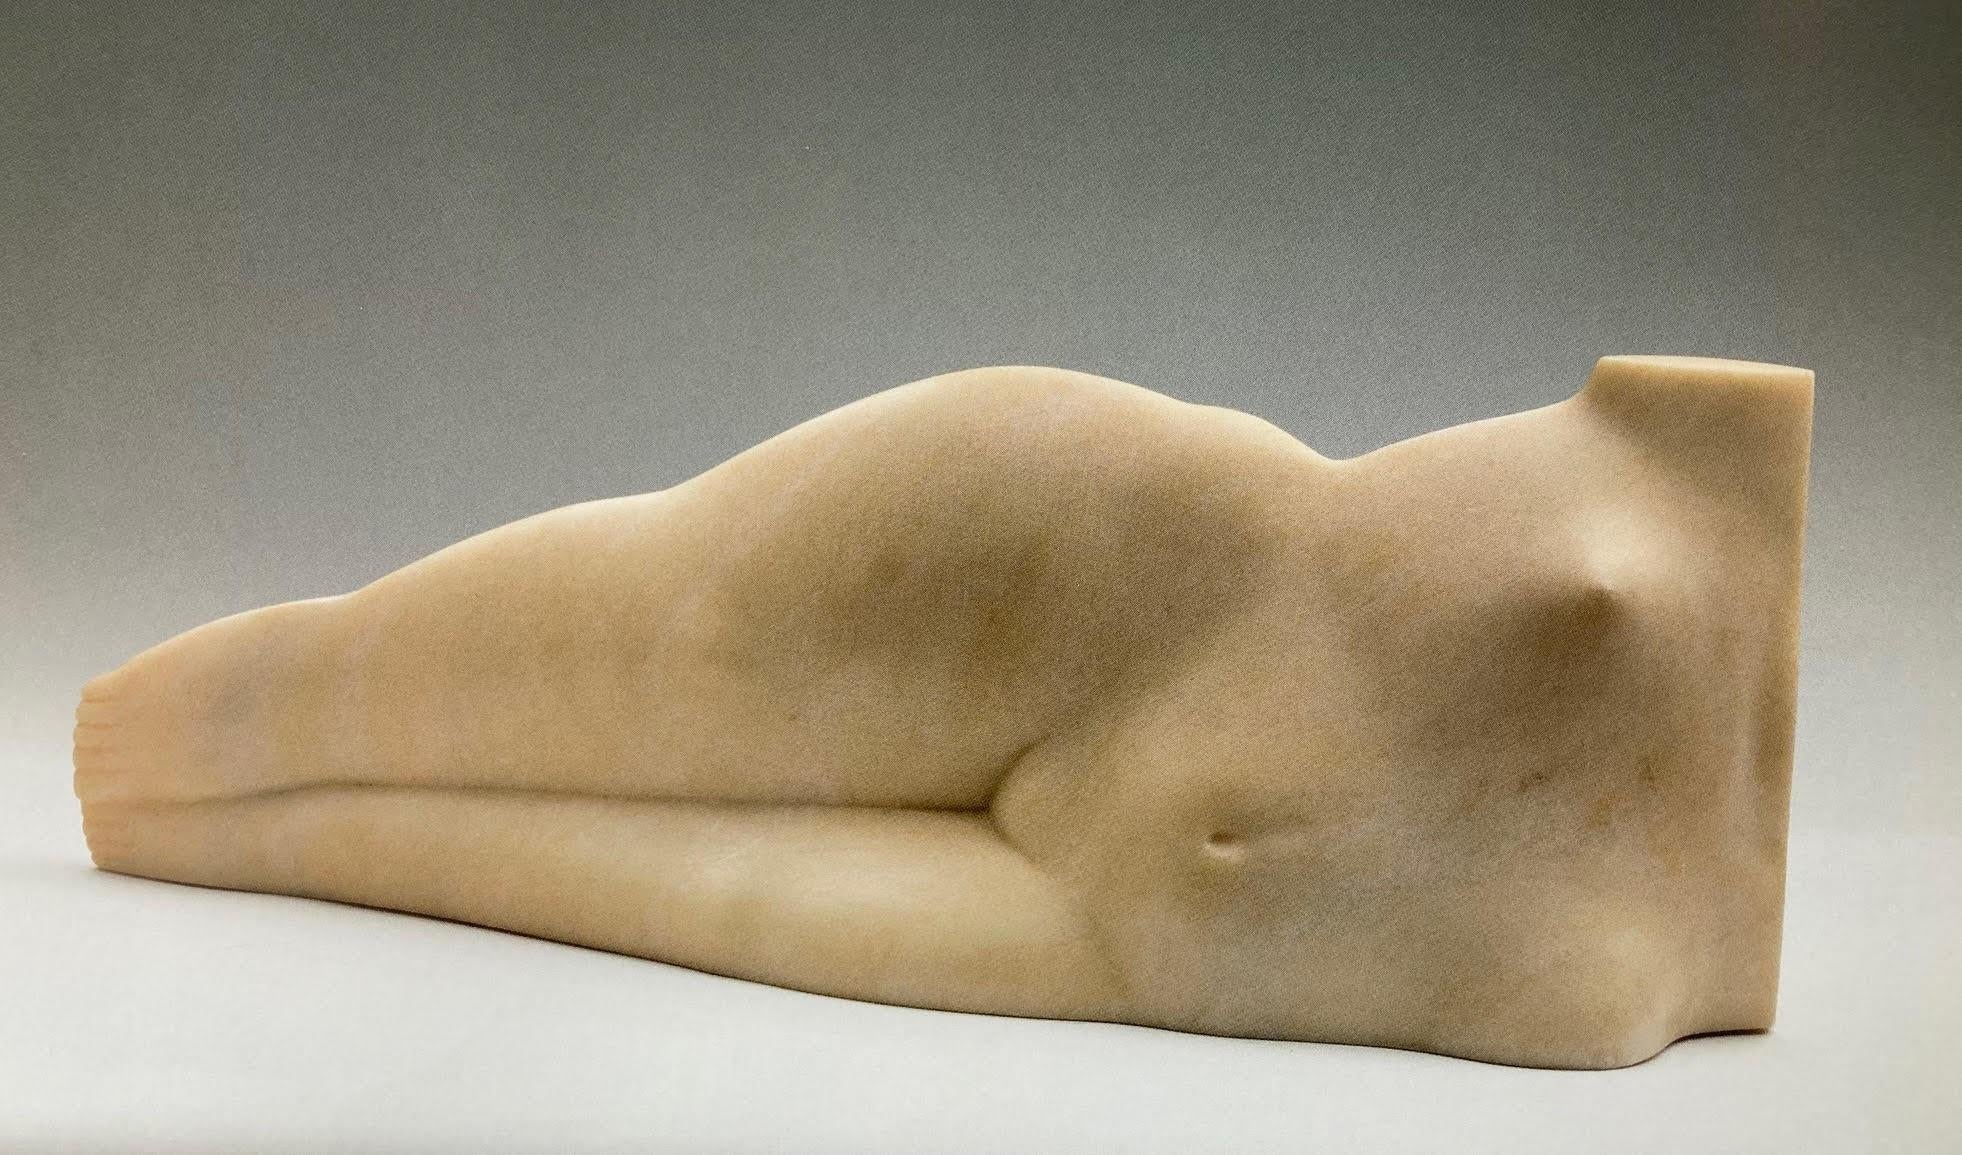 KOBE Figurative Sculpture – Liggend II Lying Down Bronzeskulptur Fackel, weibliche Aktfigur, Fackel